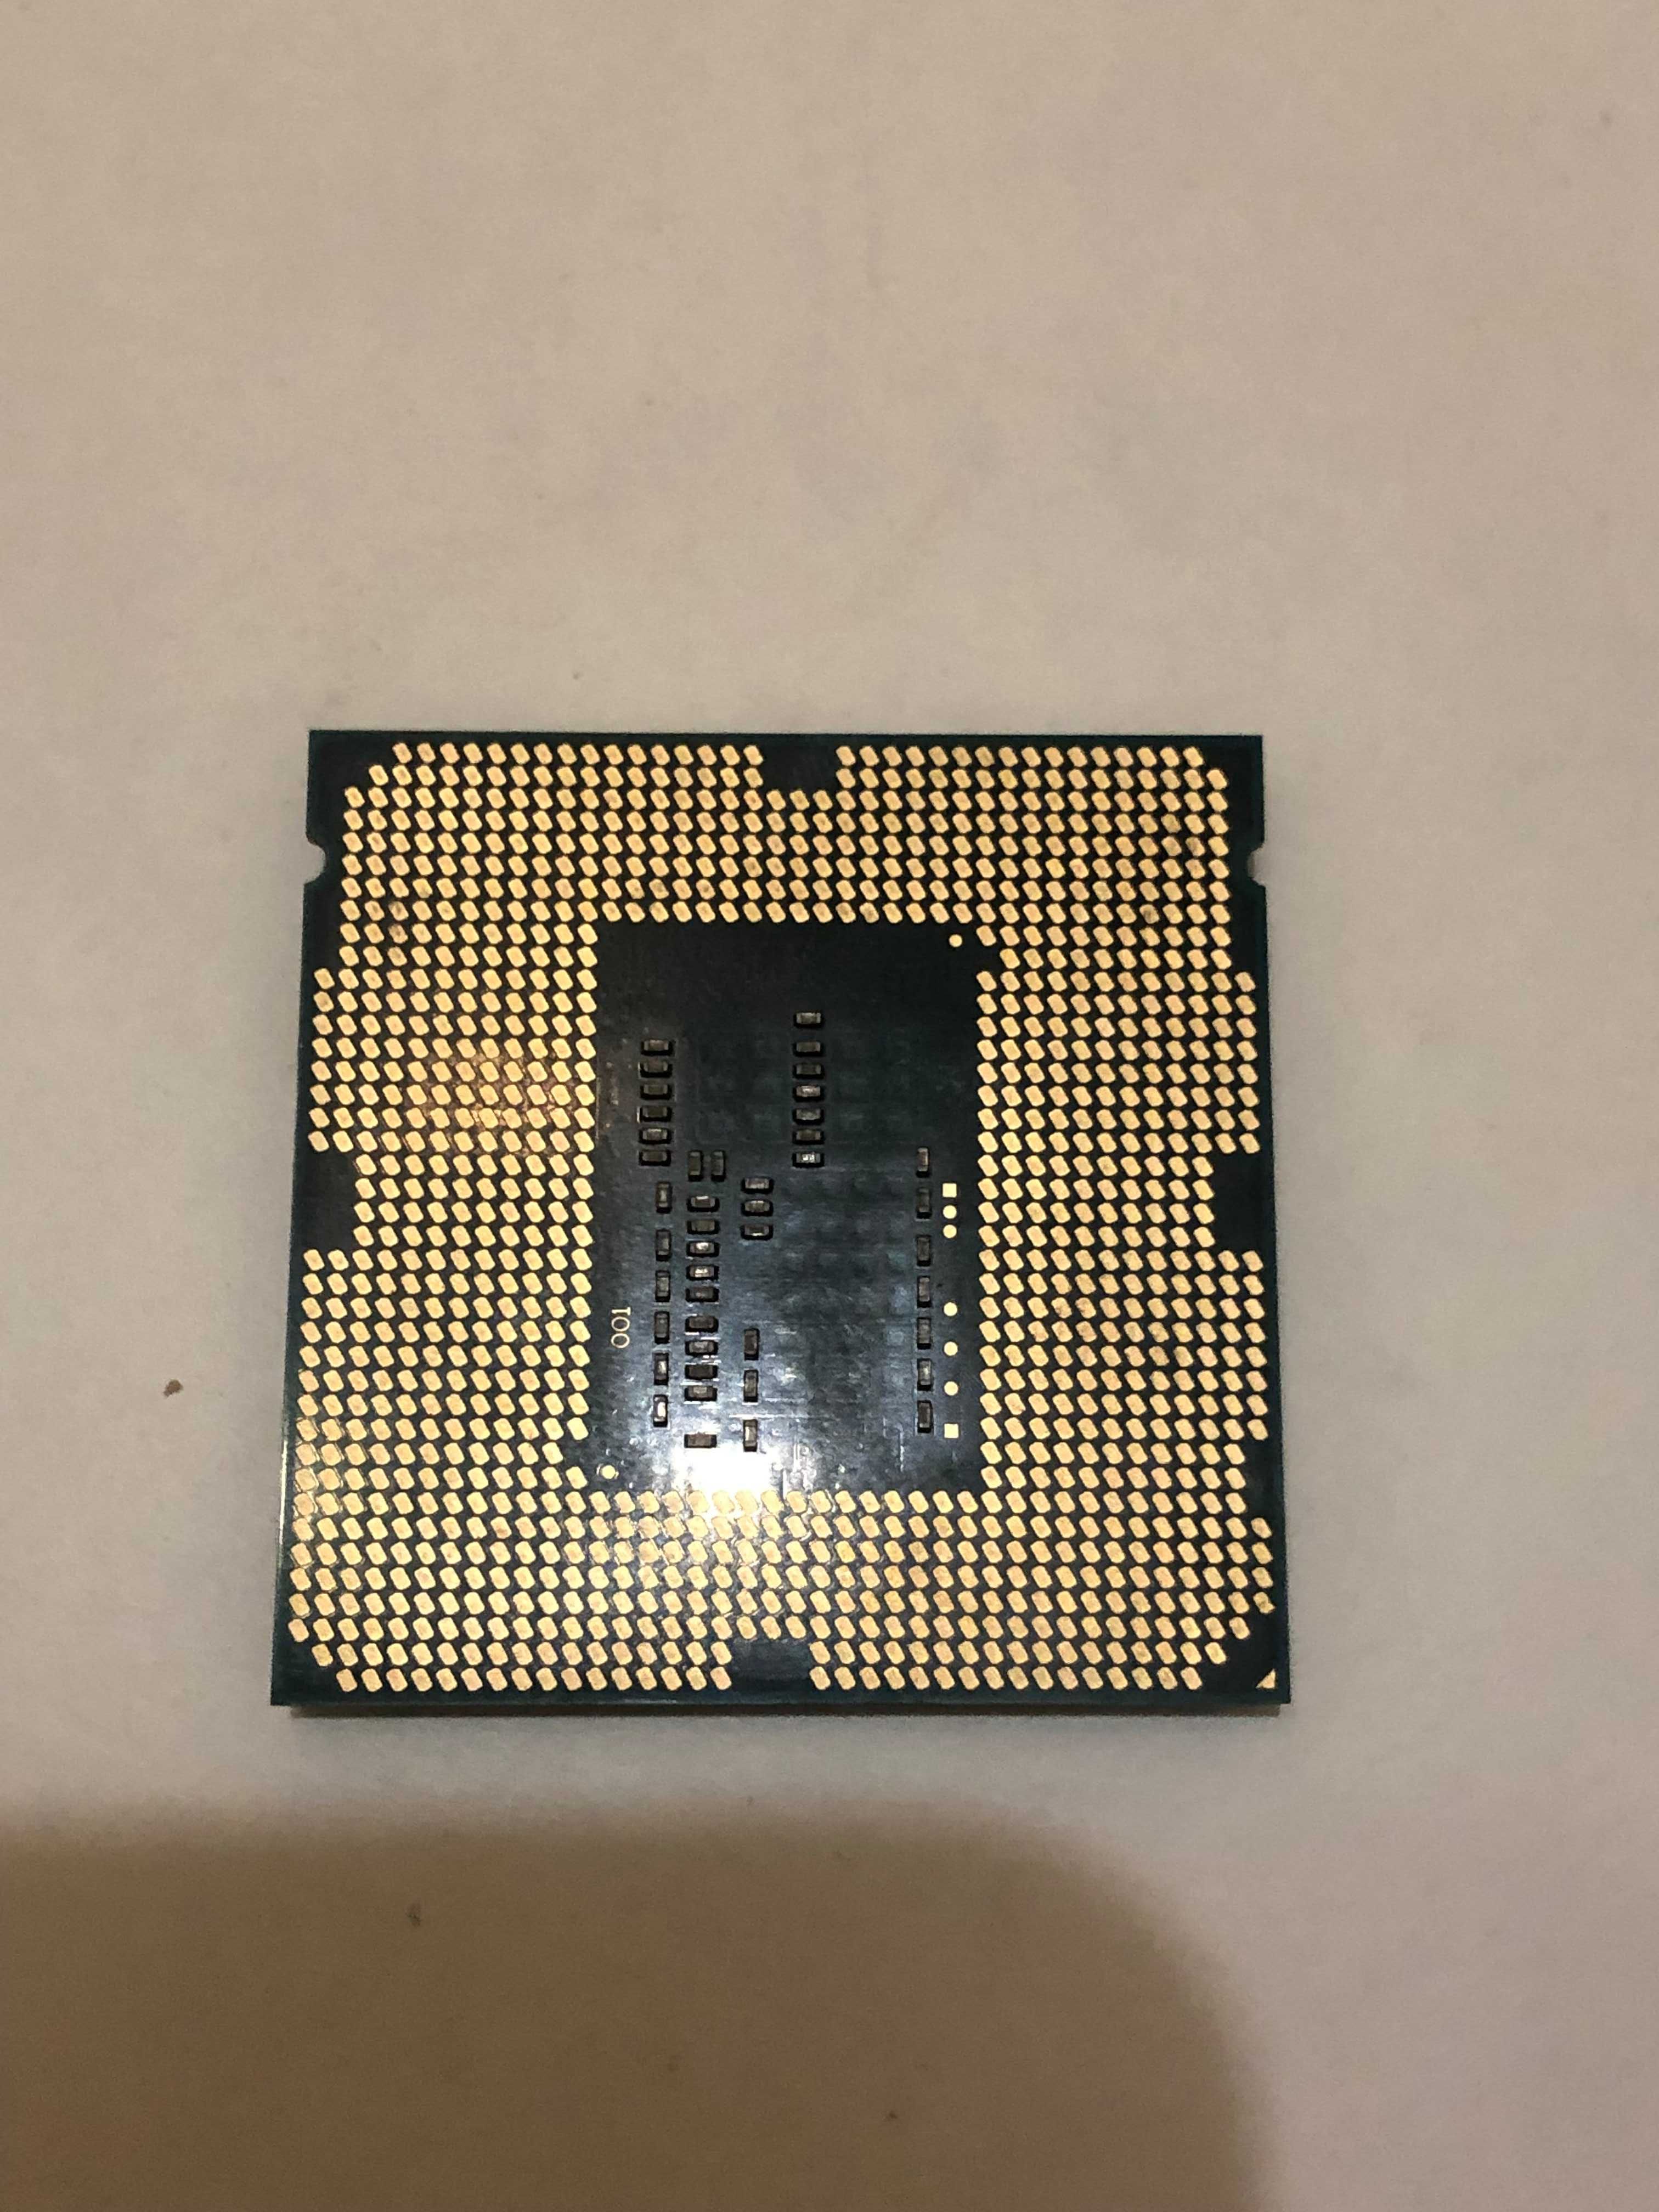 Intel Core i3-4340 3.6GHz/5GT/s/4MB s1150 (BX80646I34340)